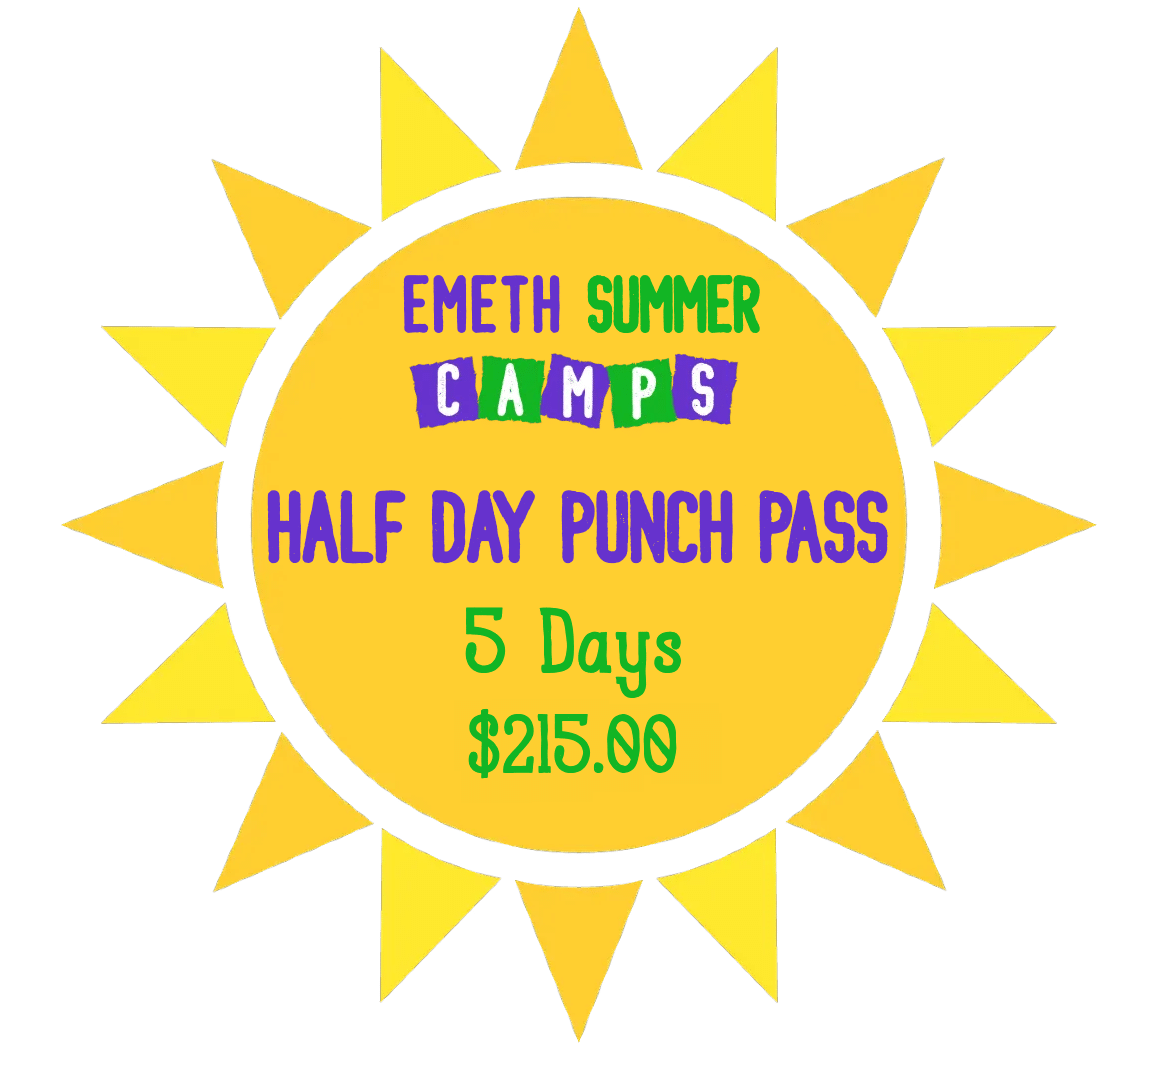 Half Day Punch Pass